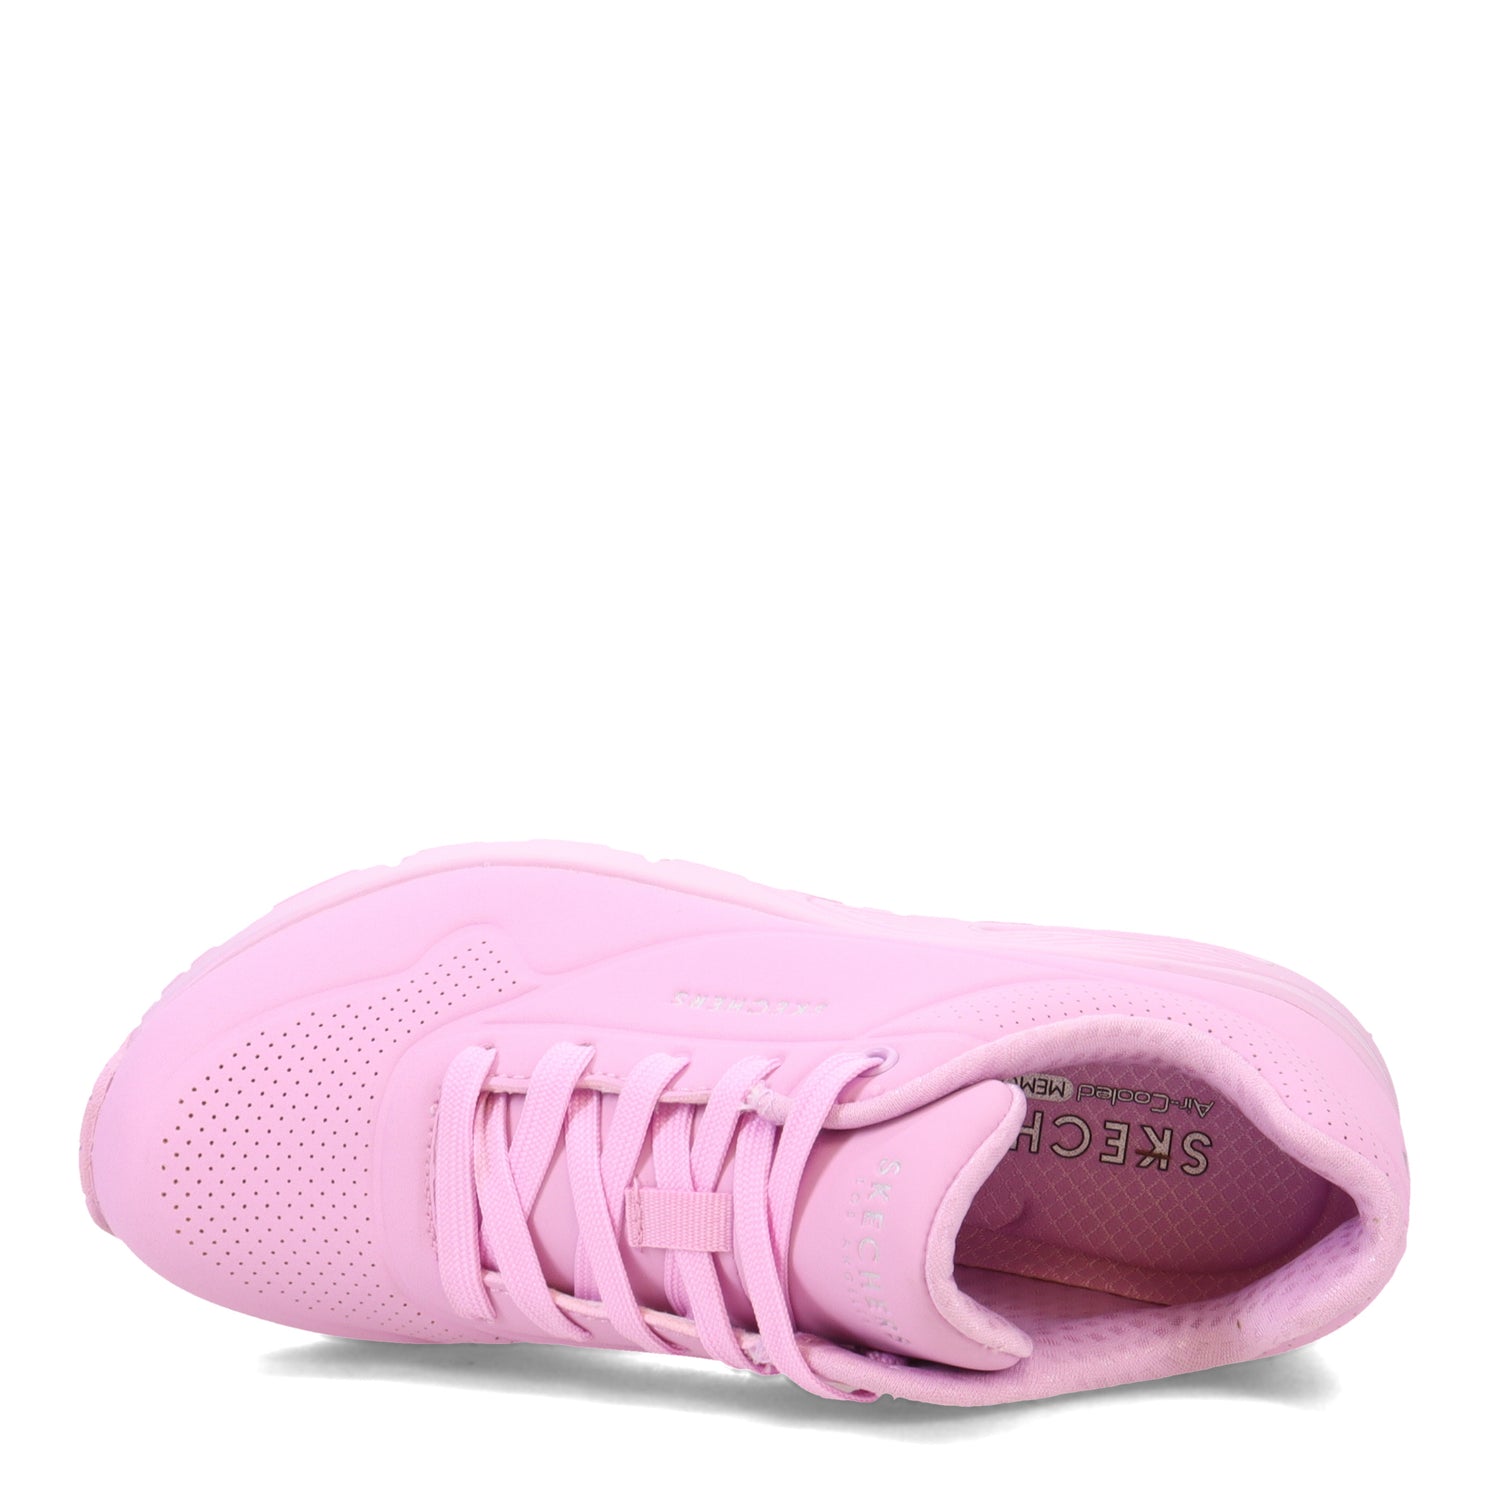 Peltz Shoes  Women's Skechers Street Uno - Bright Air Sneaker Lavender 177125-LAV